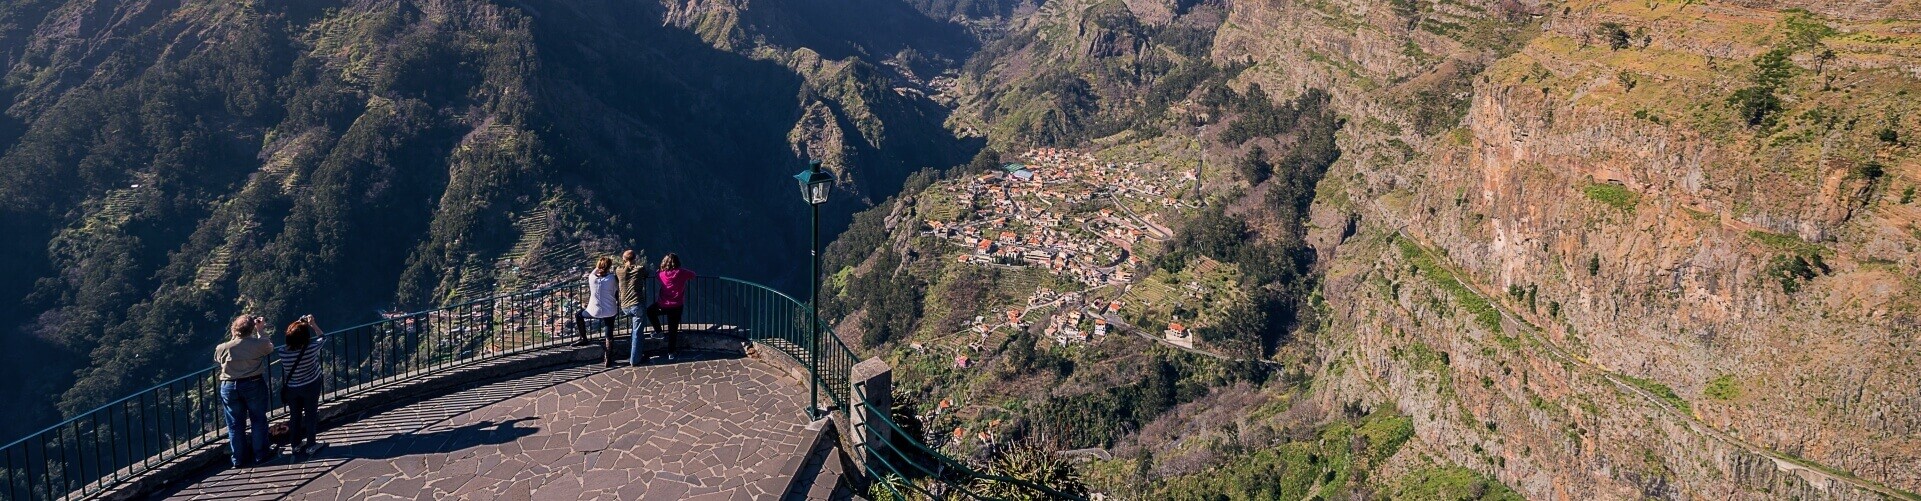 Nuns Valley Half Day Tour Madeira